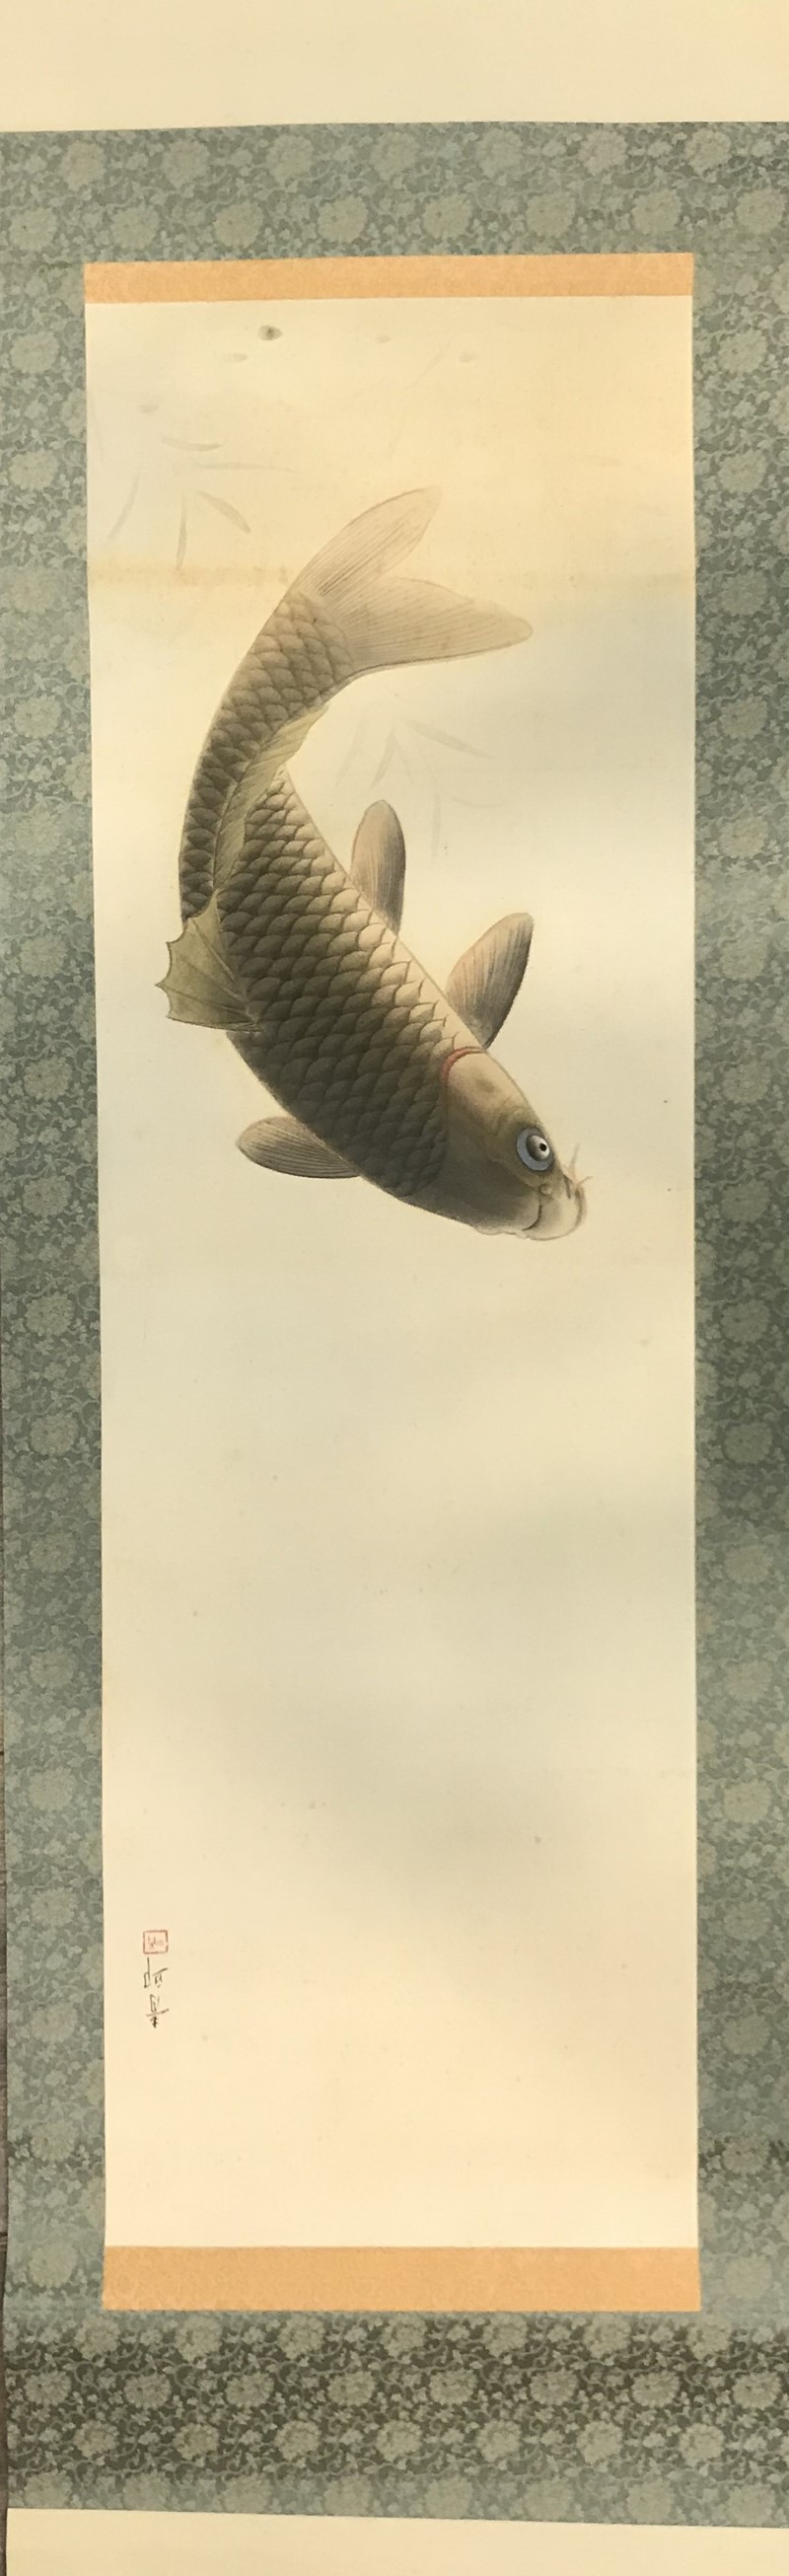 Japanese Watercolor. Koi carp.  - Auction ASIAN AND CONTINENTAL FINE ARTS - Bado  [..]